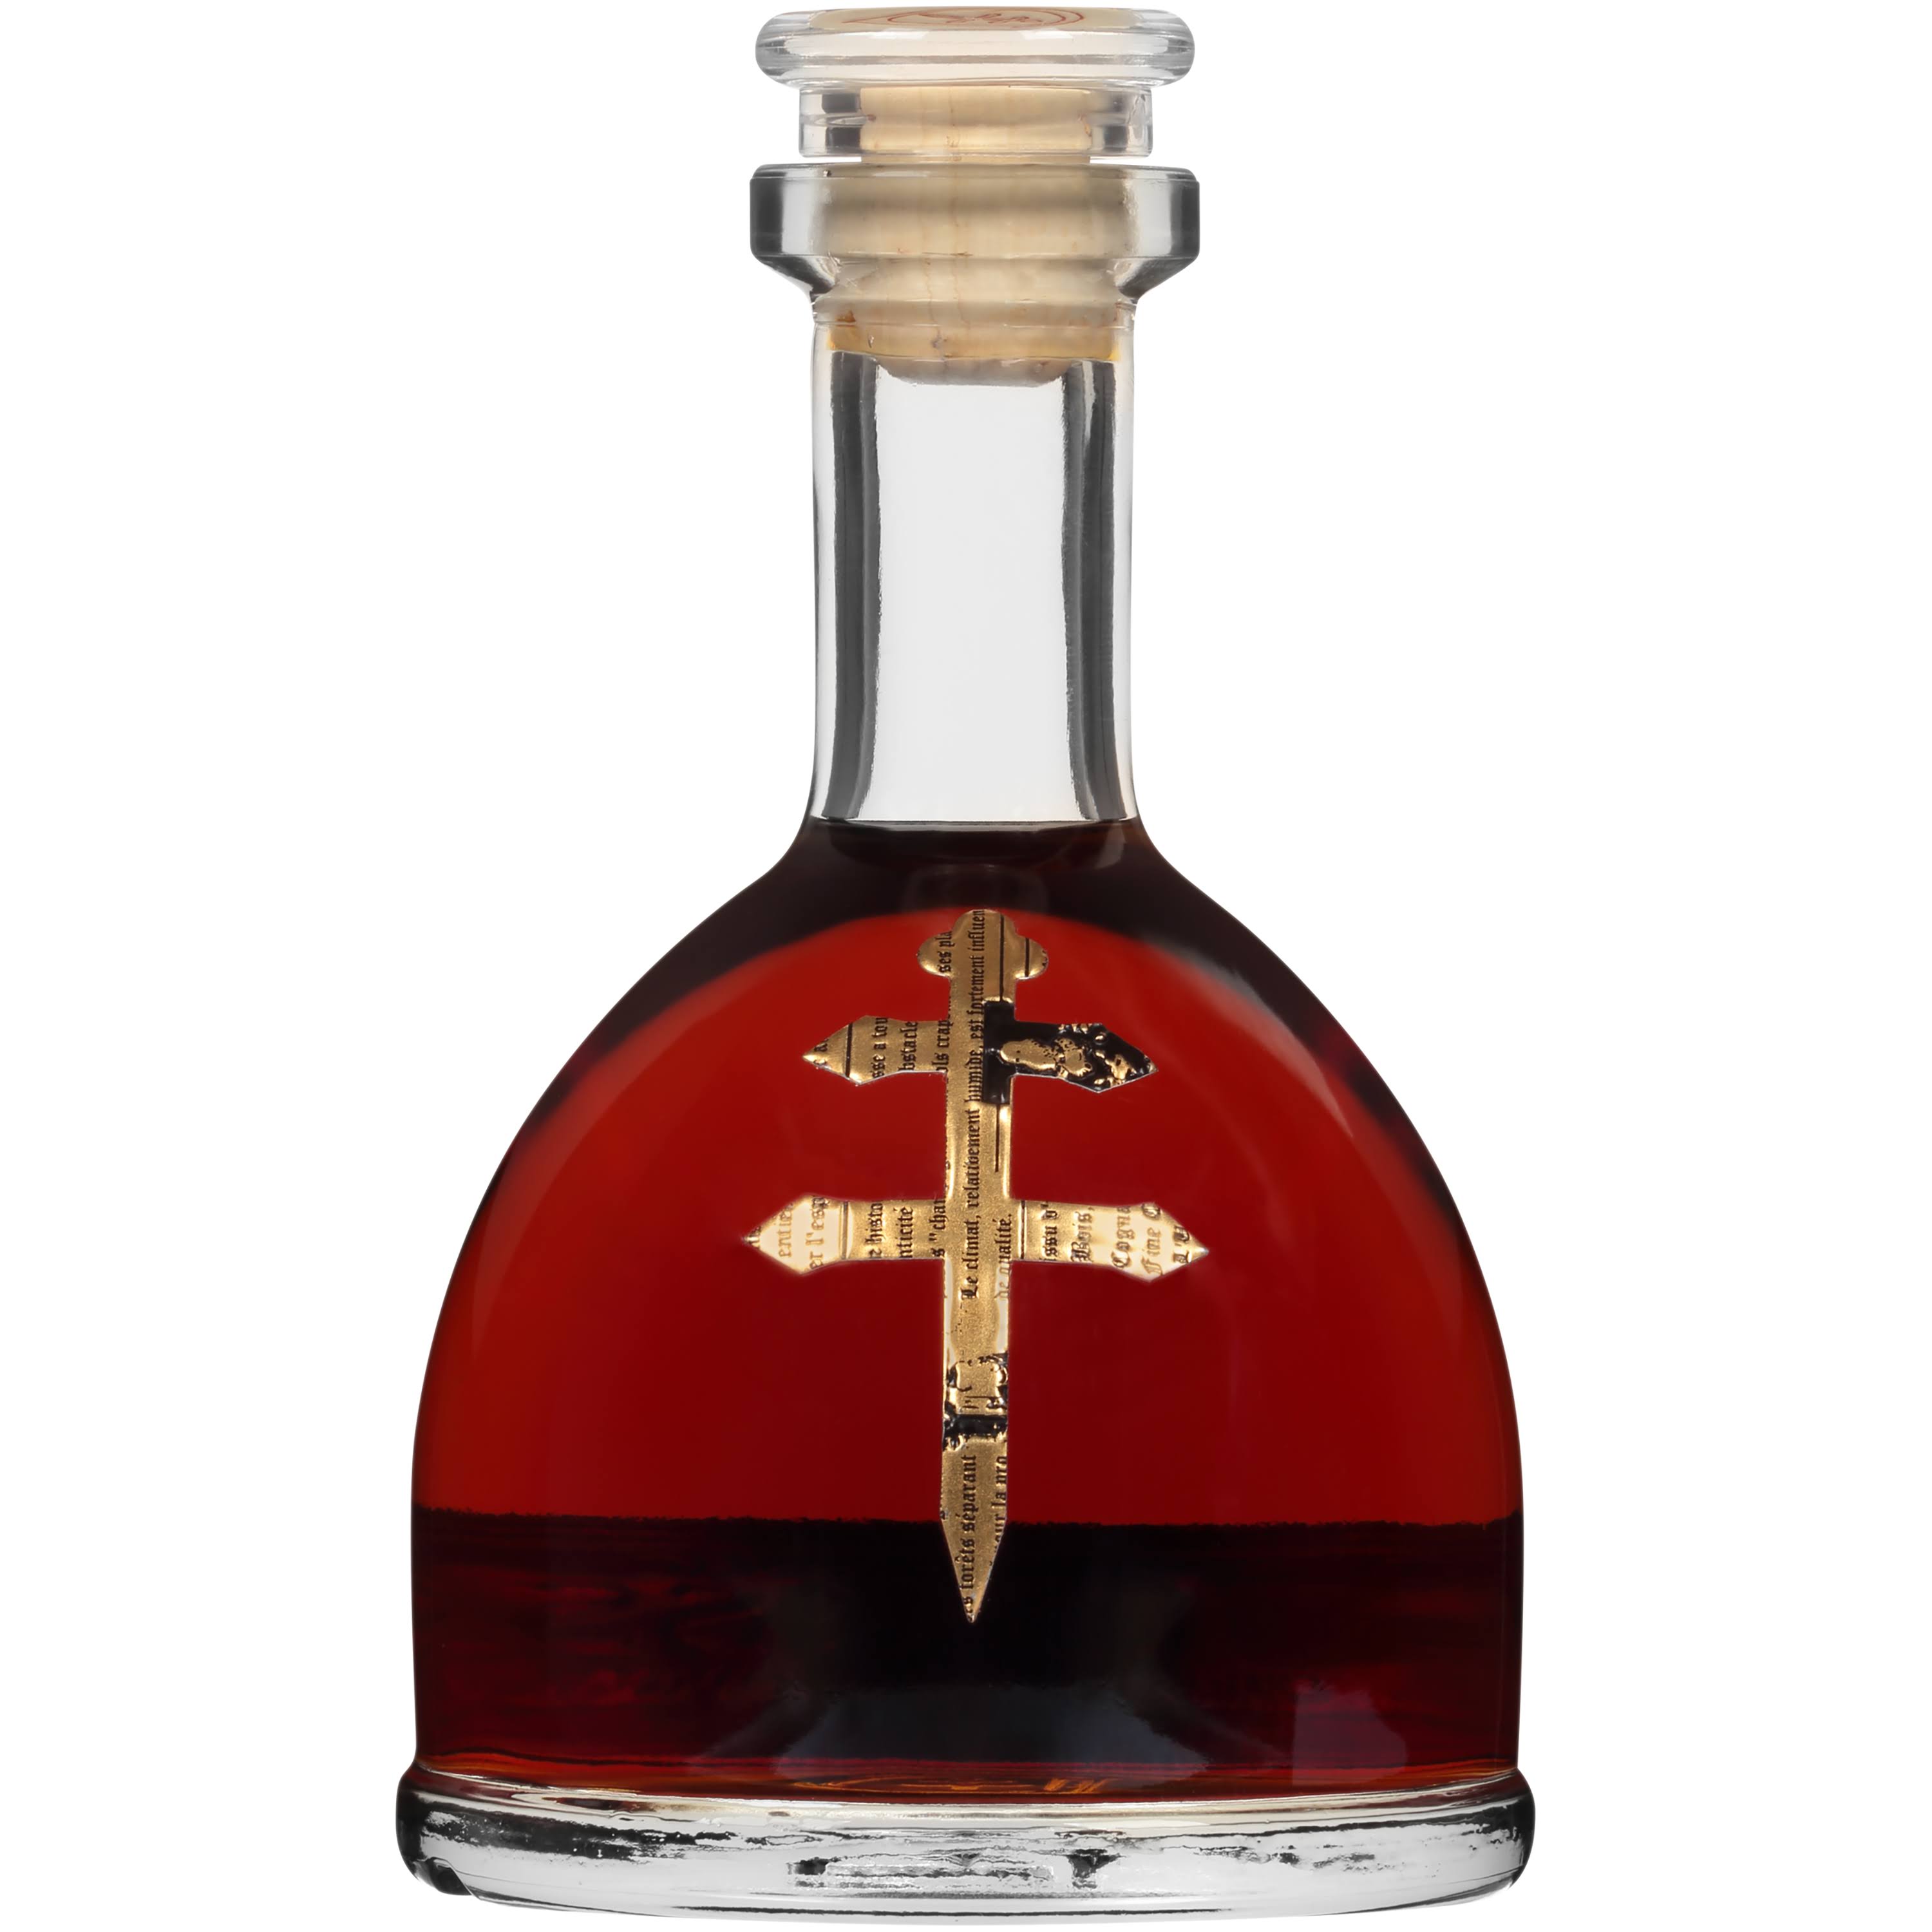 D'usse VSOP Cognac 37.5cl Dark Brown